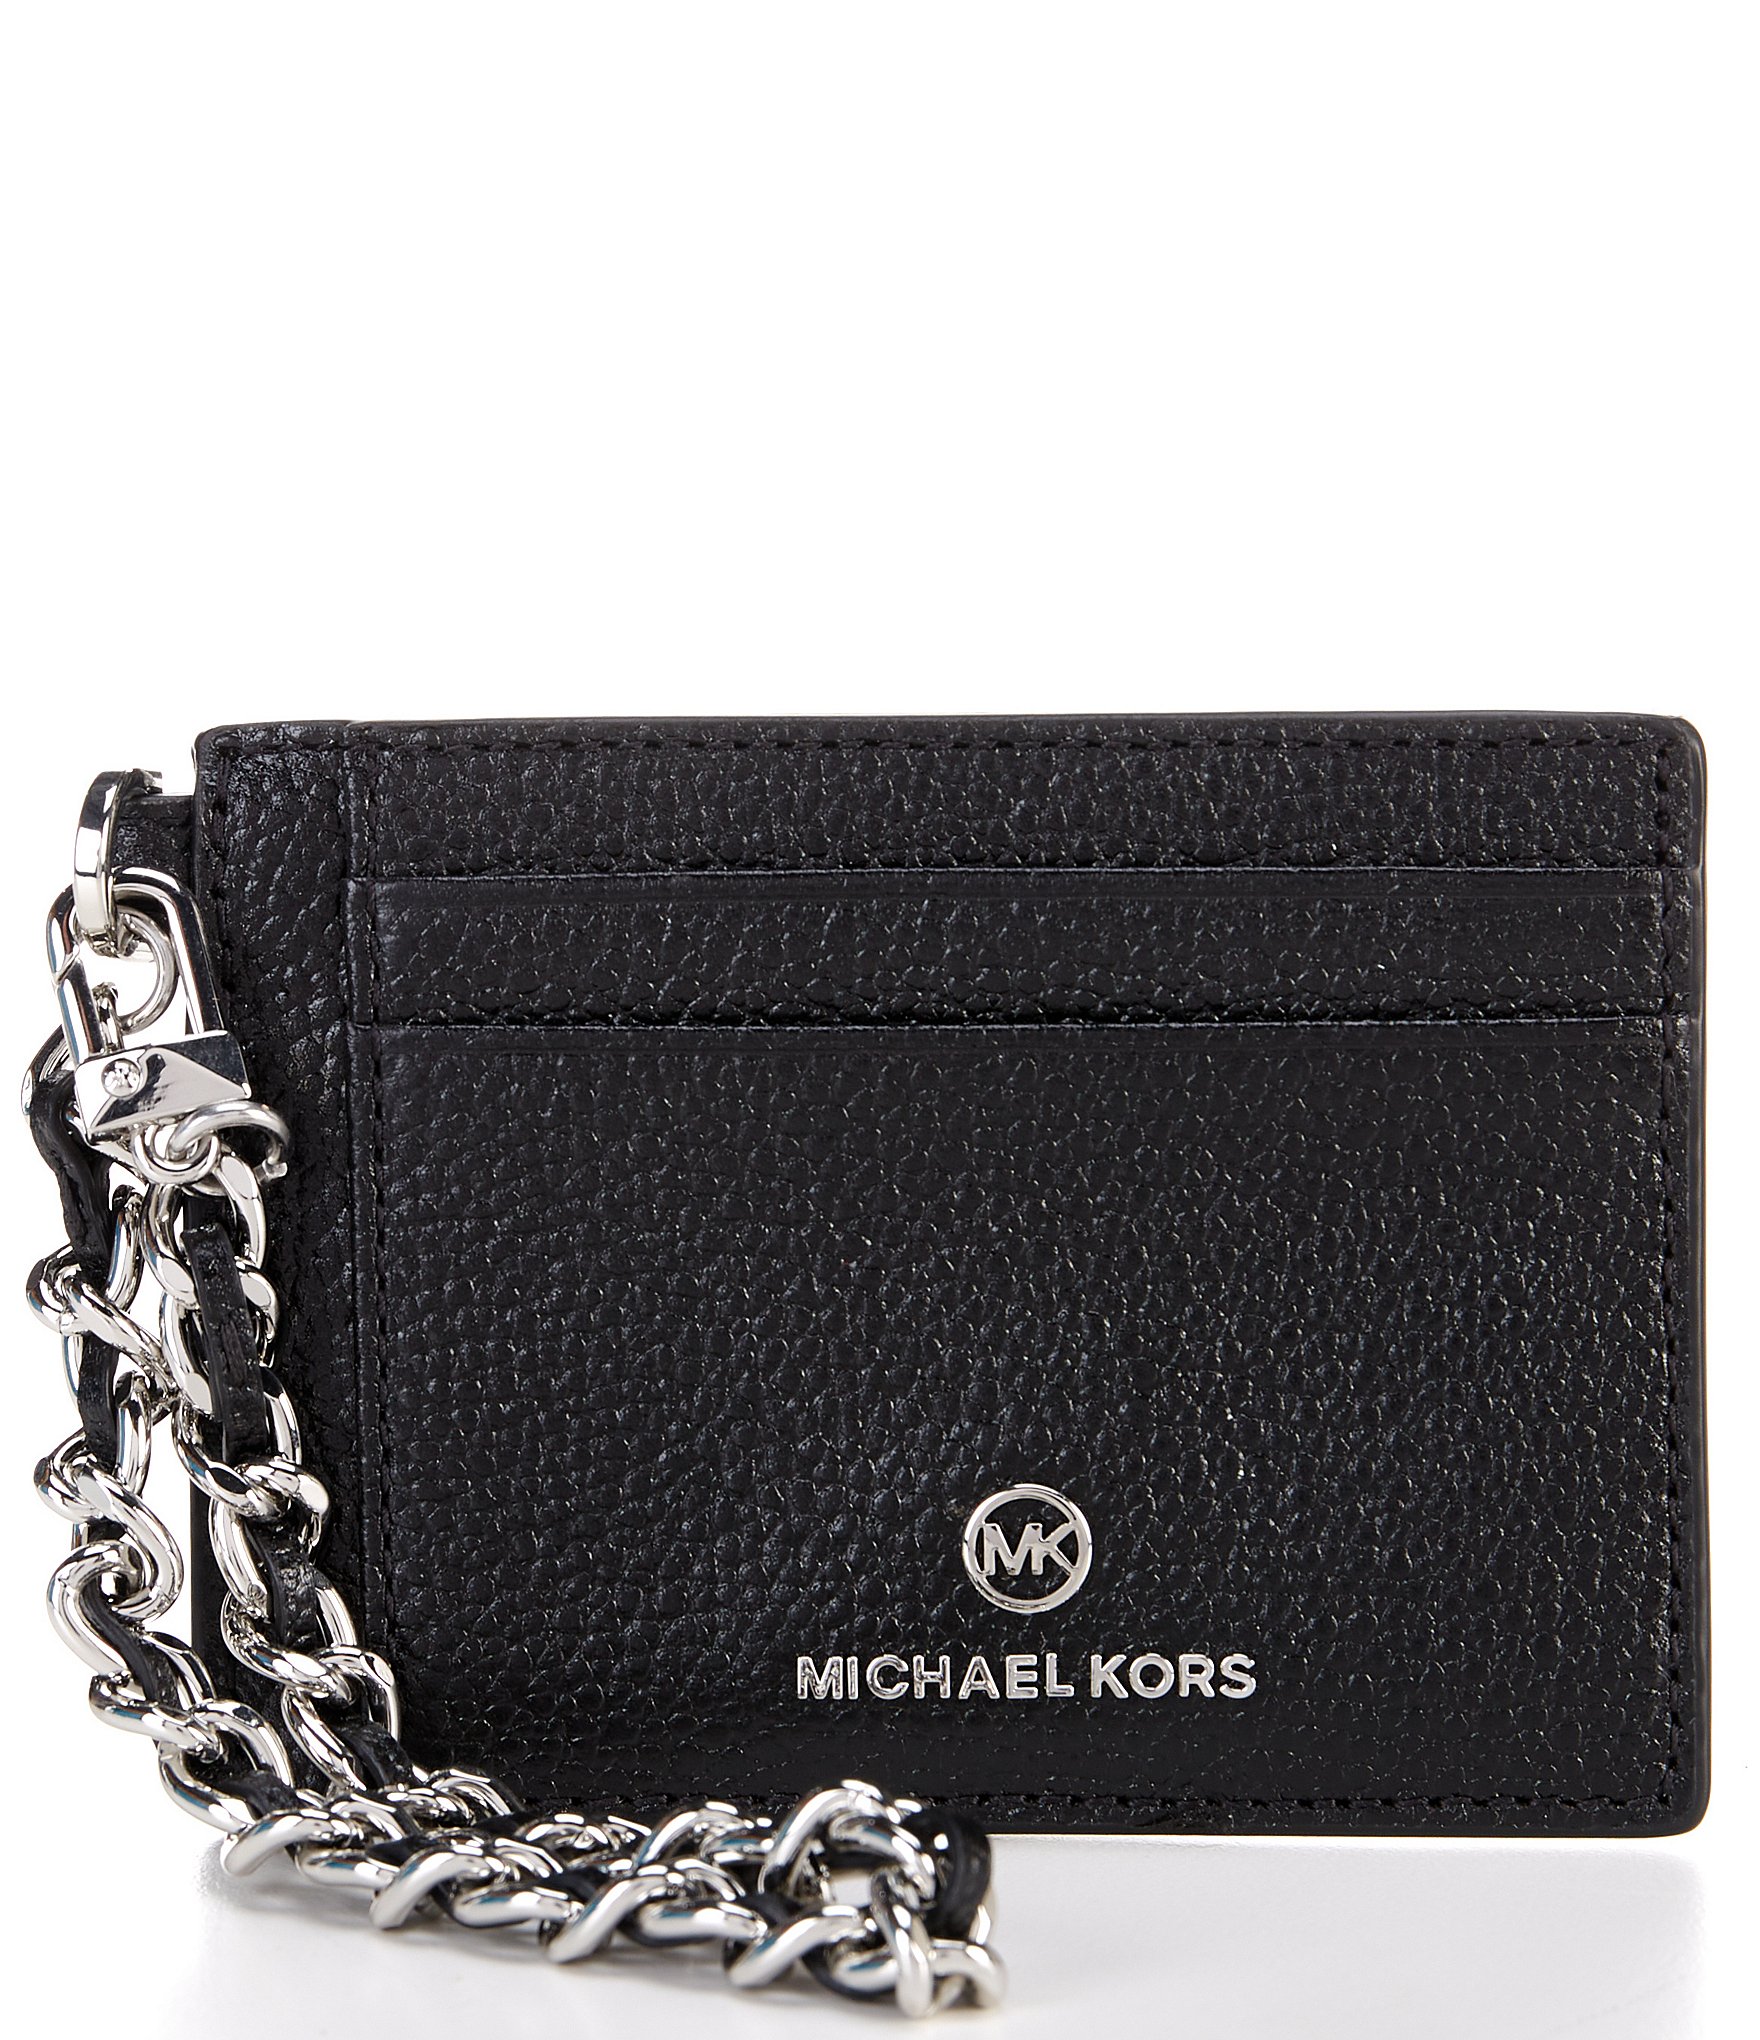 Michael Kors Jet Set Travel Small Top Zip Leather Coin Pouch  Wallet   Black  Walmartcom